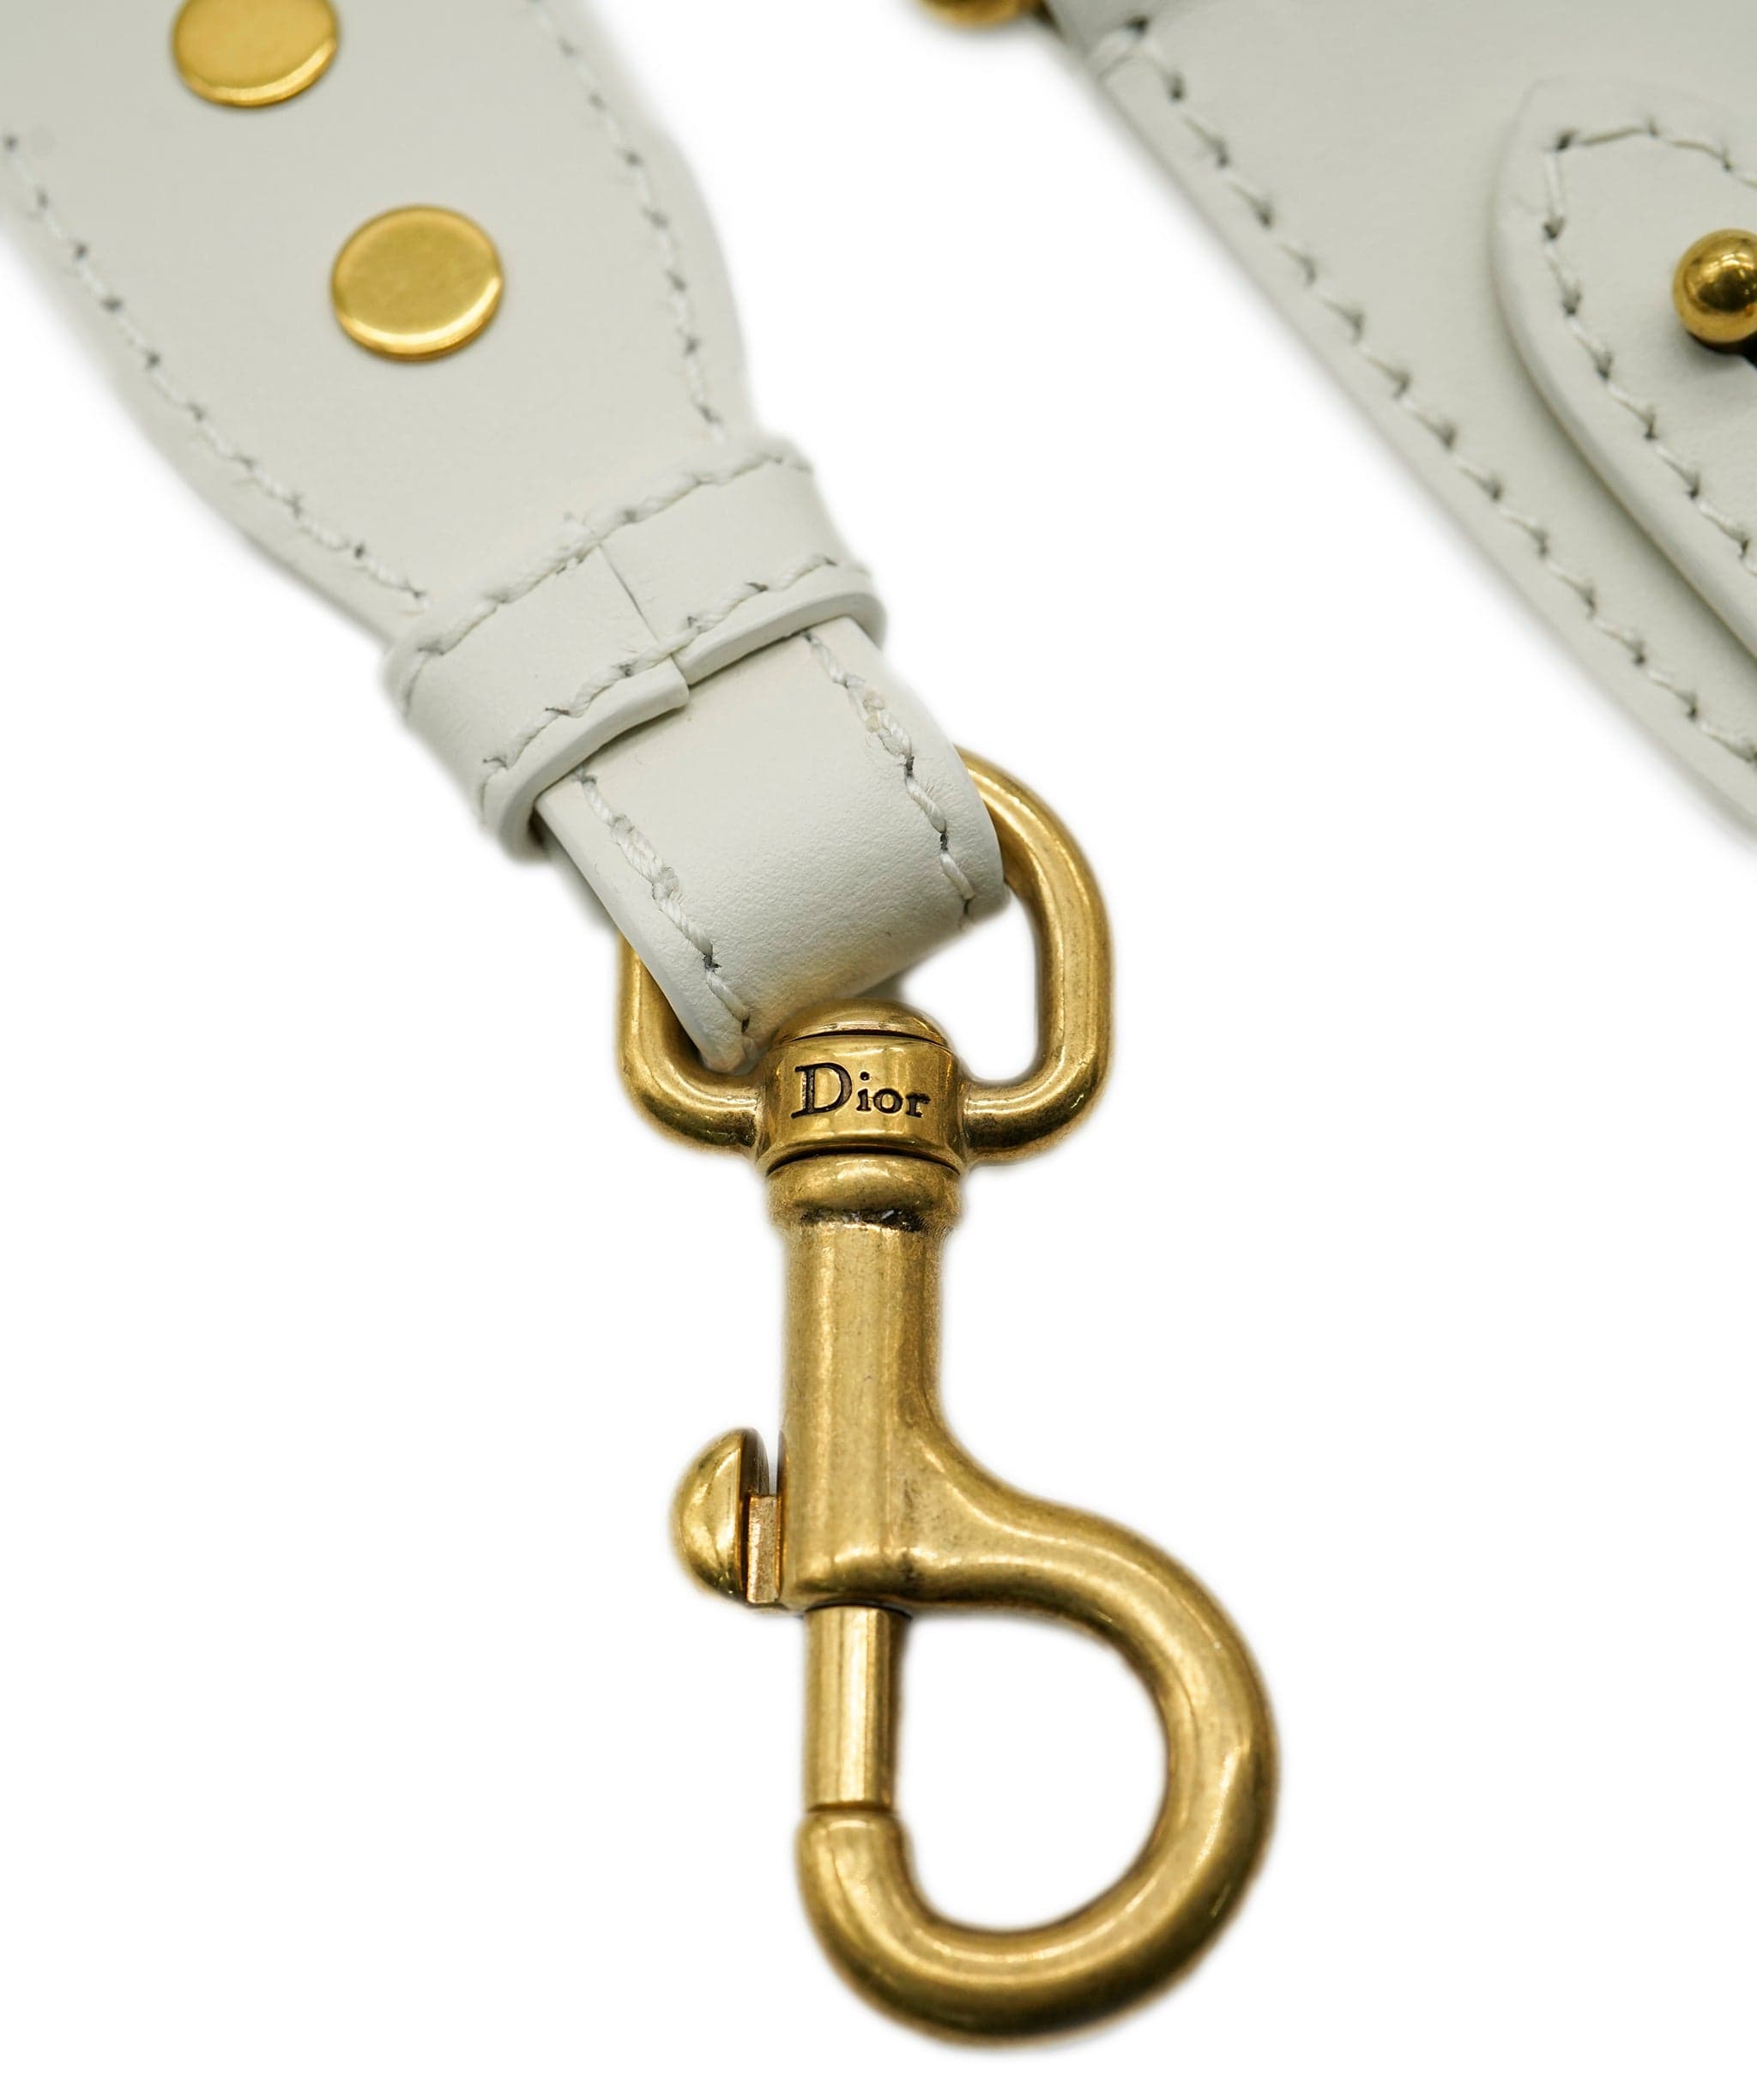 Christian Dior Dior Canvas bucket bag white/gold AVC1887